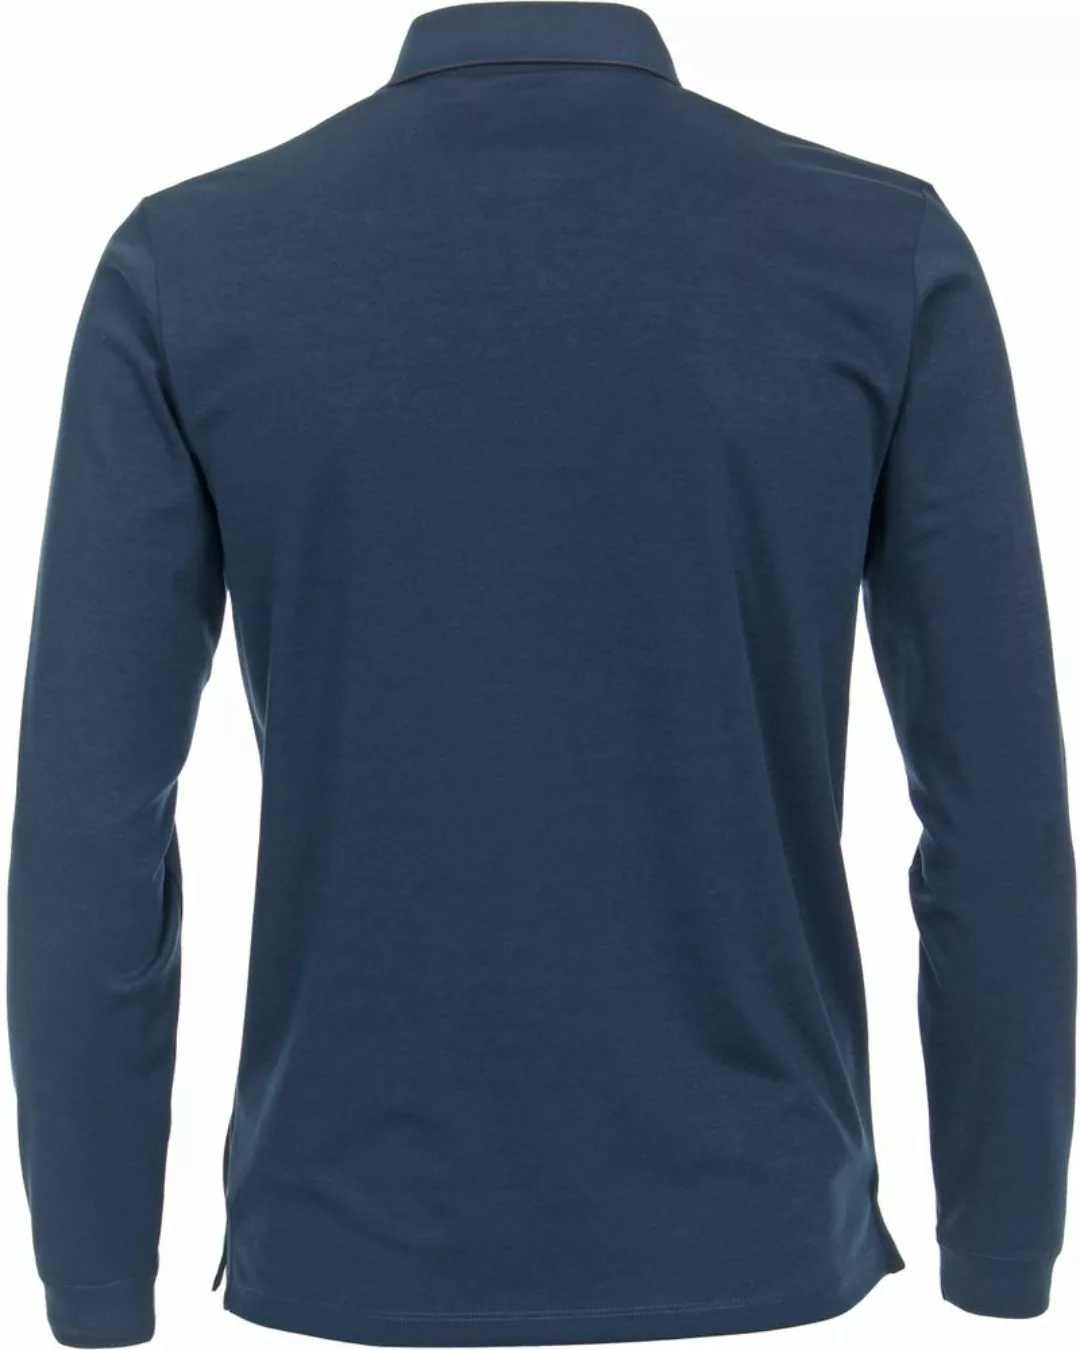 Casa Moda Long Sleeve Poloshirt Navy - Größe L günstig online kaufen